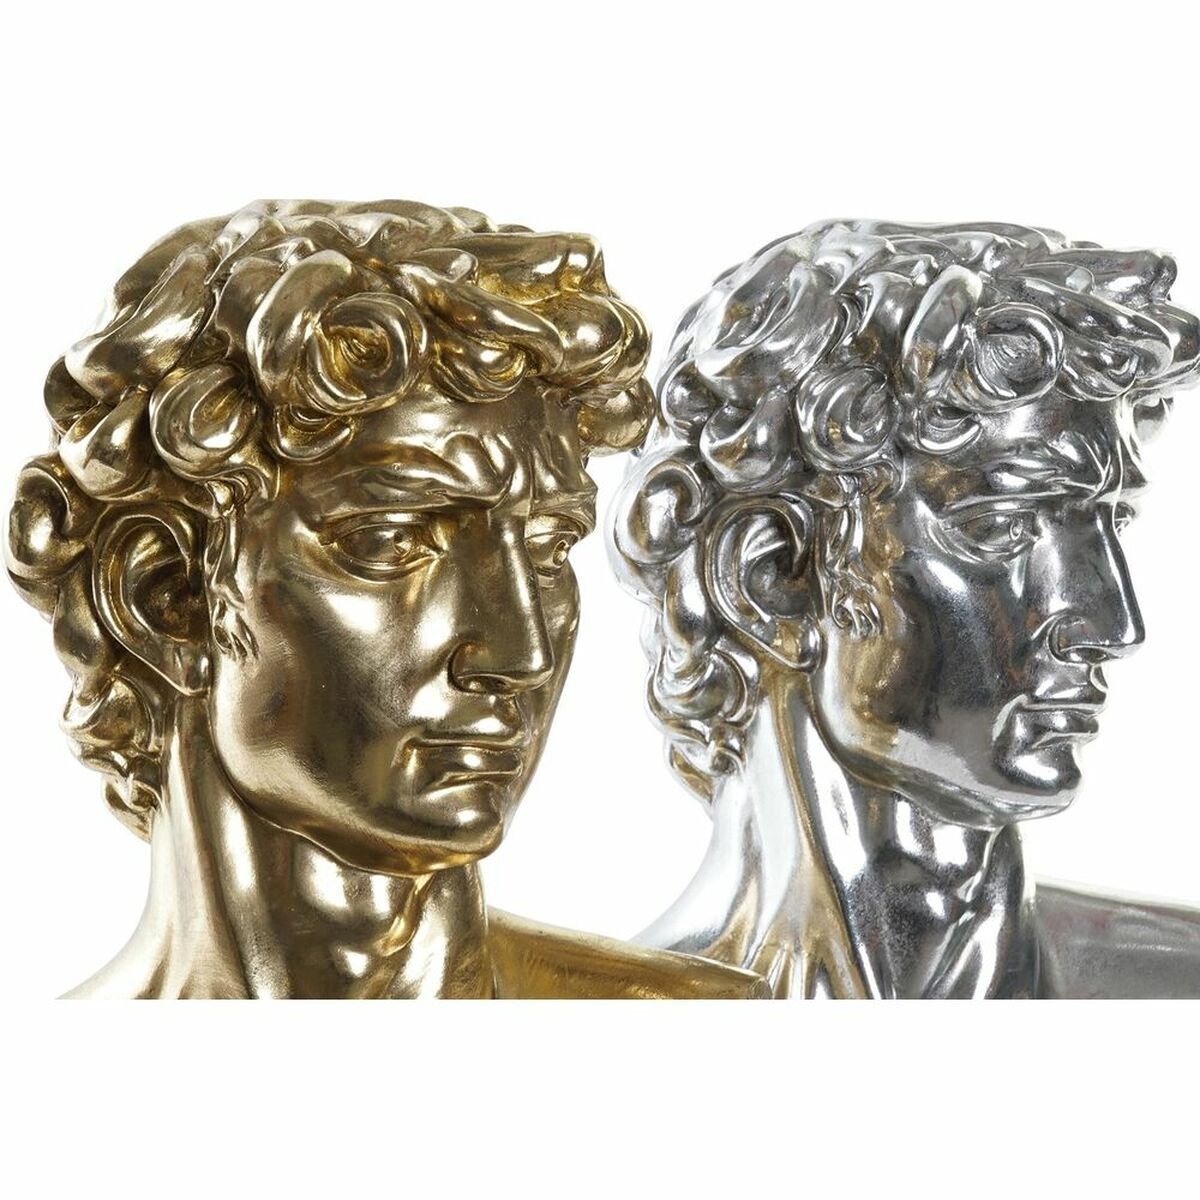 David plata y oro 24,5 x 17,5 x 36 cm